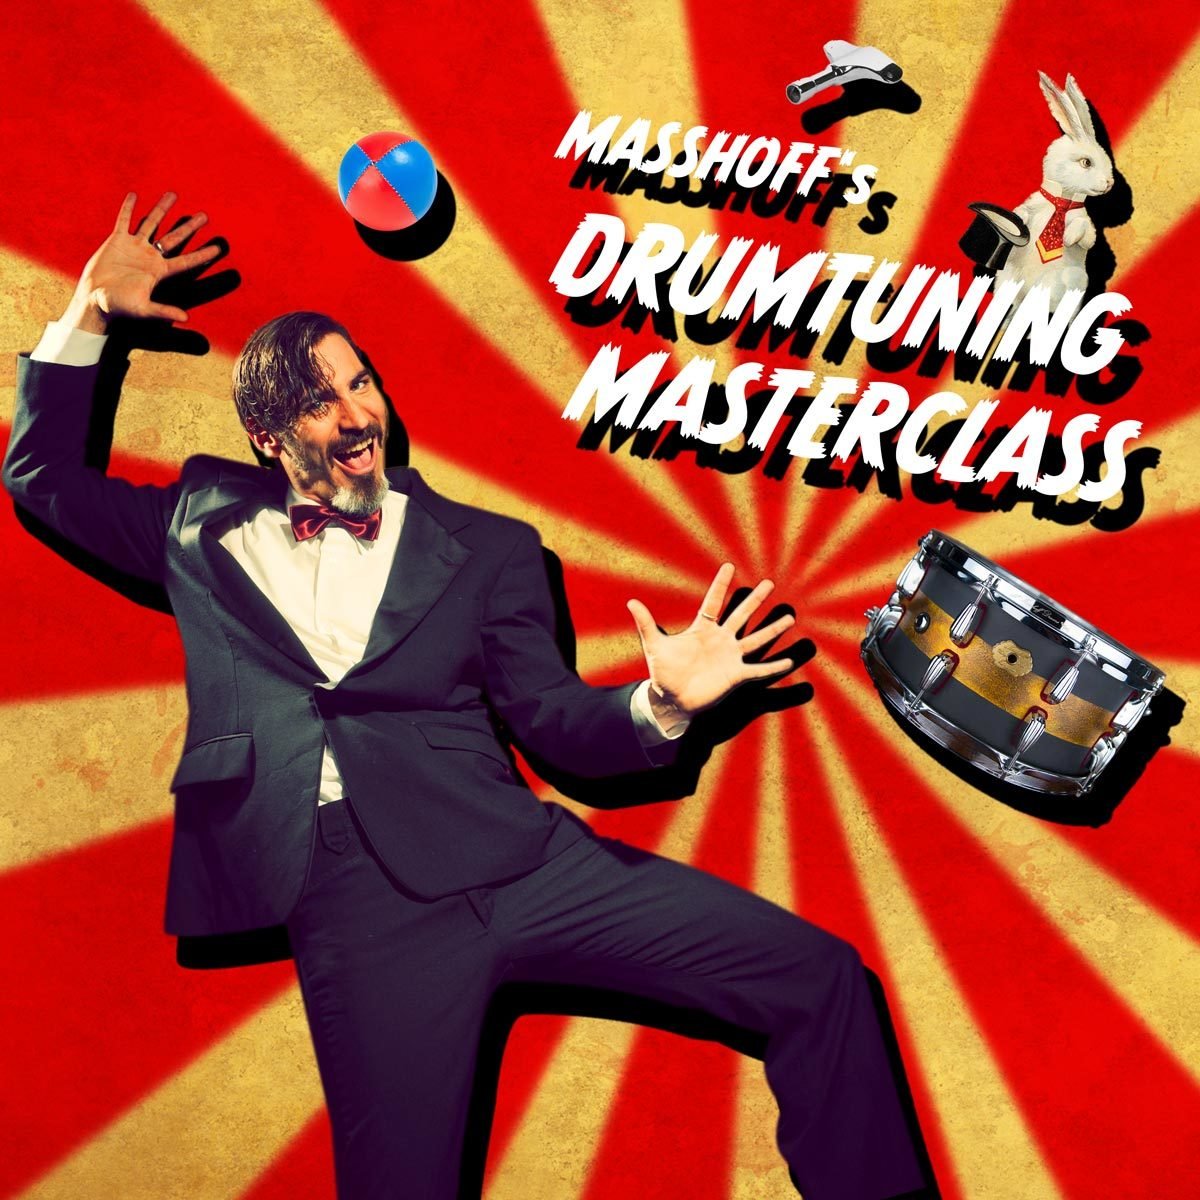 Z___Drumtuning Masterclass Workshops (Last Minute Tickets)